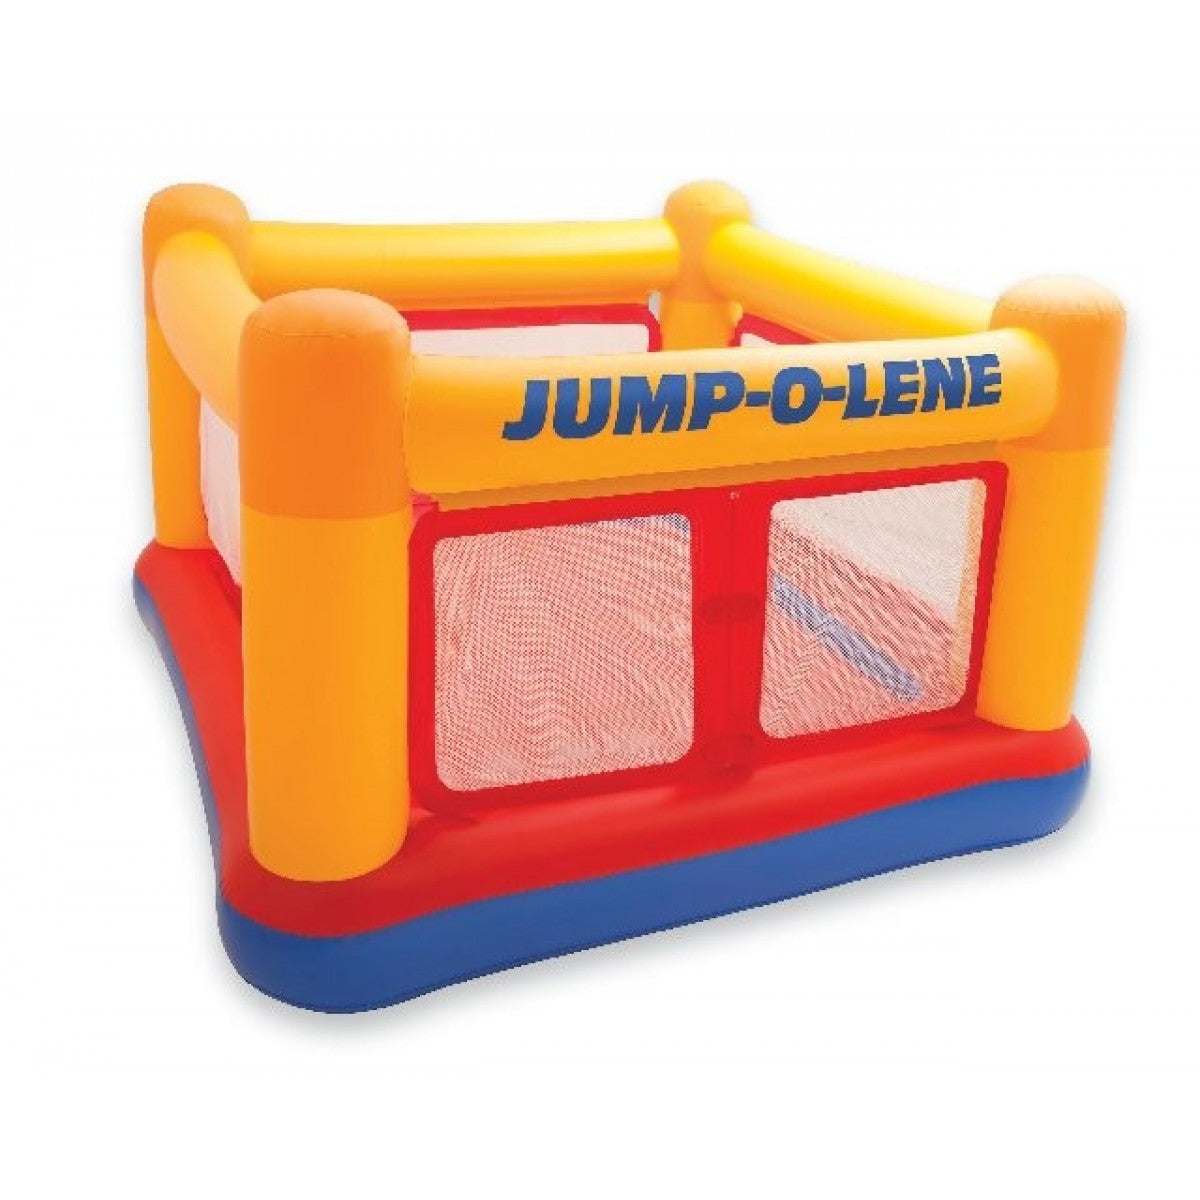 intex jump o lene trampoline playhouse 68 5 x 68 5 x 44